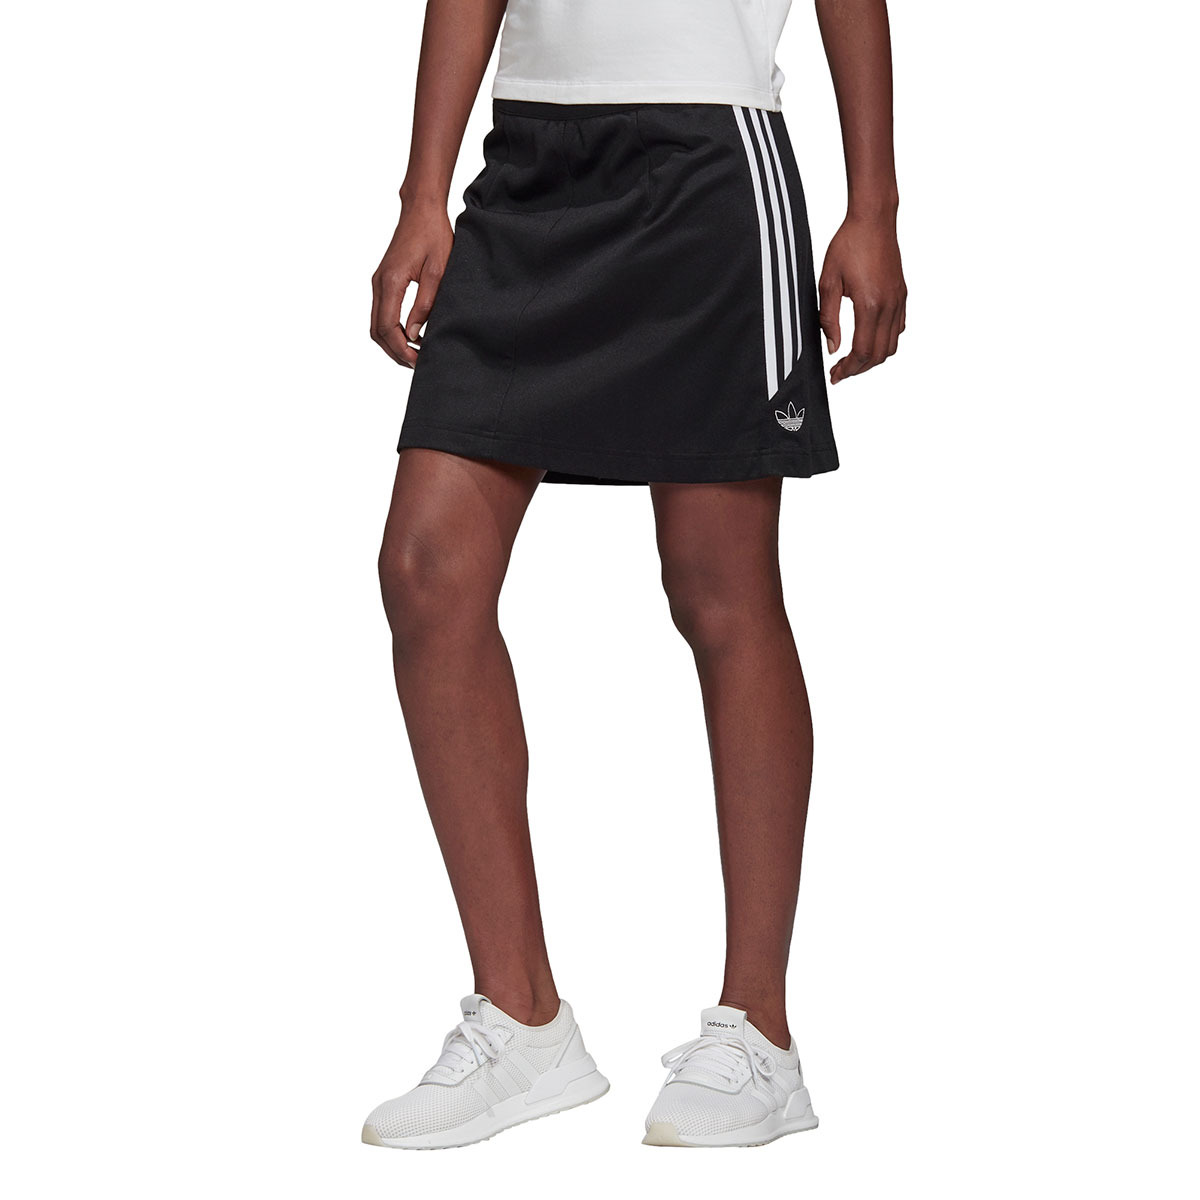 Юбка адидас. Юбка adidas Originals skirt. Юбка adidas ge4816. Юбка adidas y3 теннис. Юбка adidas Rich mnisi Tennis Premium skirt.